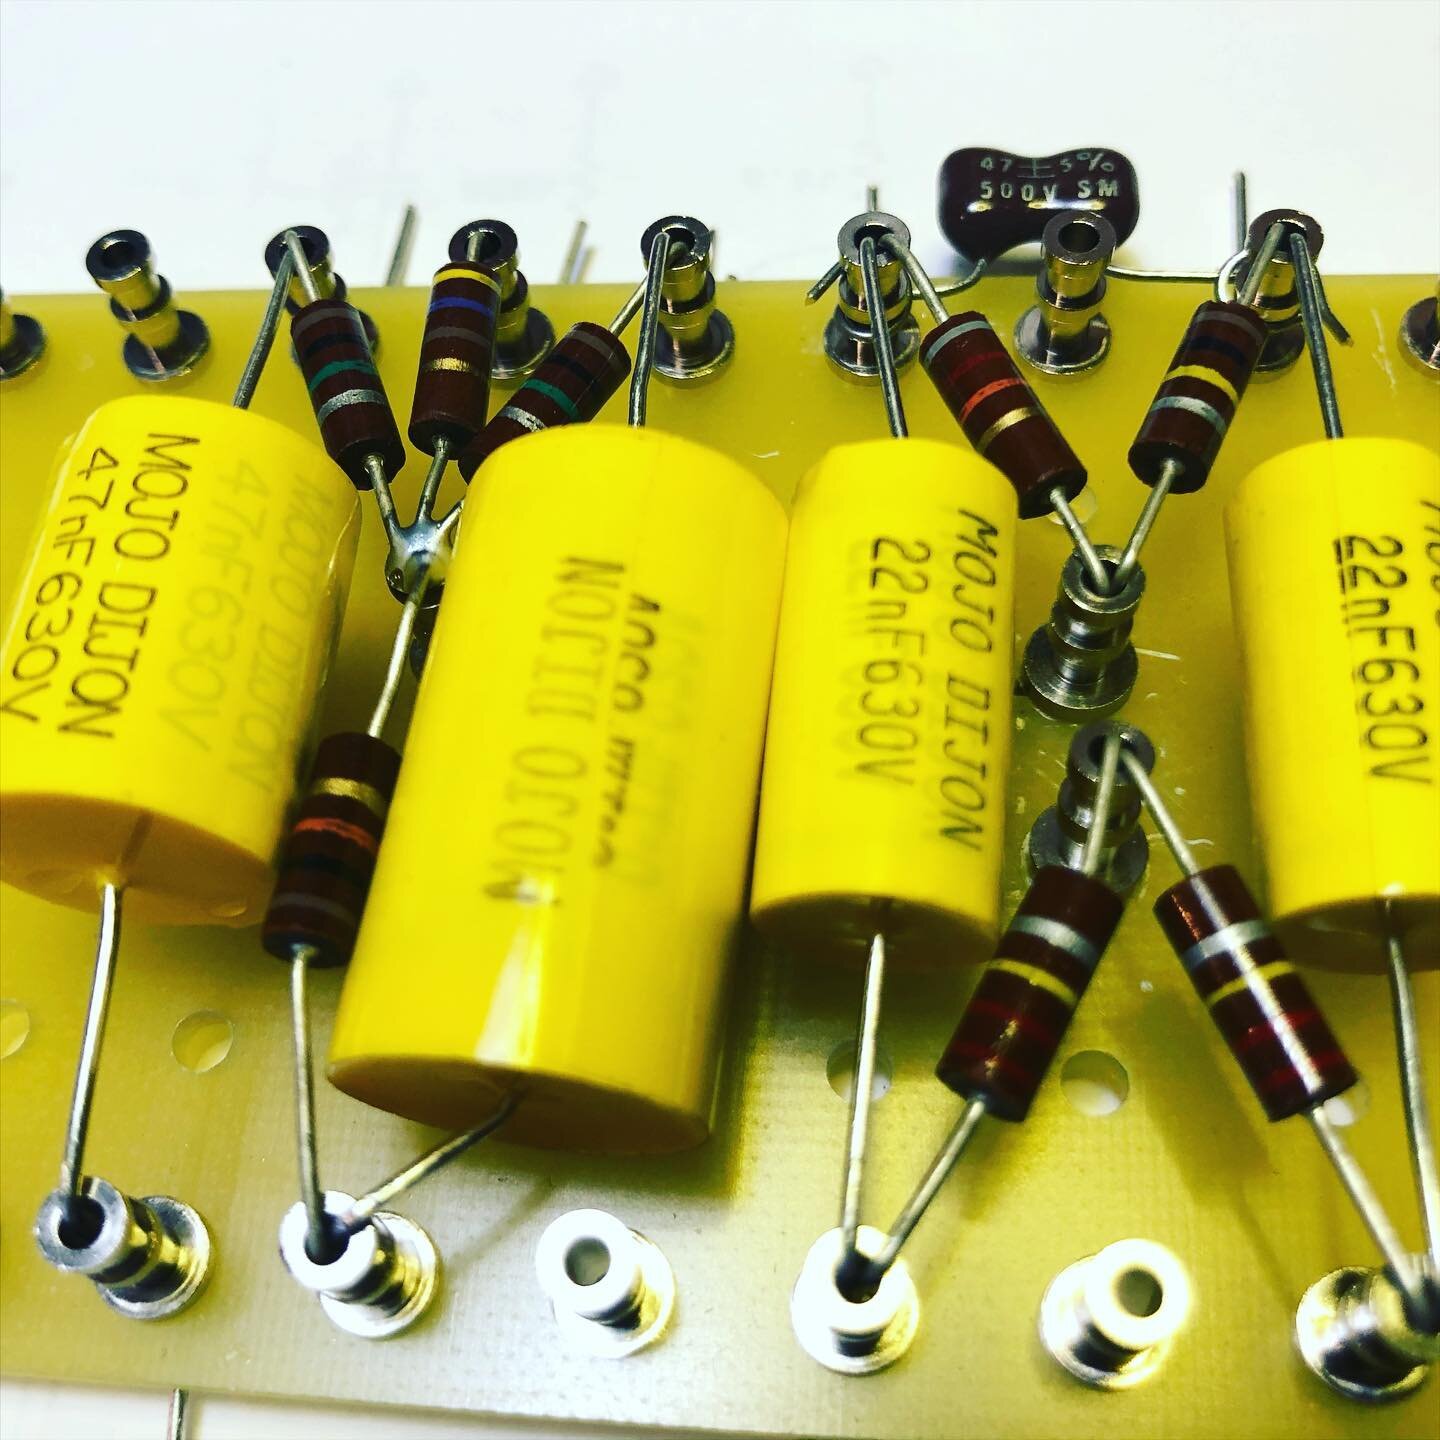 Custom build with Mojotone Dijon coupling capacitors. @mojotone #bigcrunch #baltimore #tubeamp #capacitor